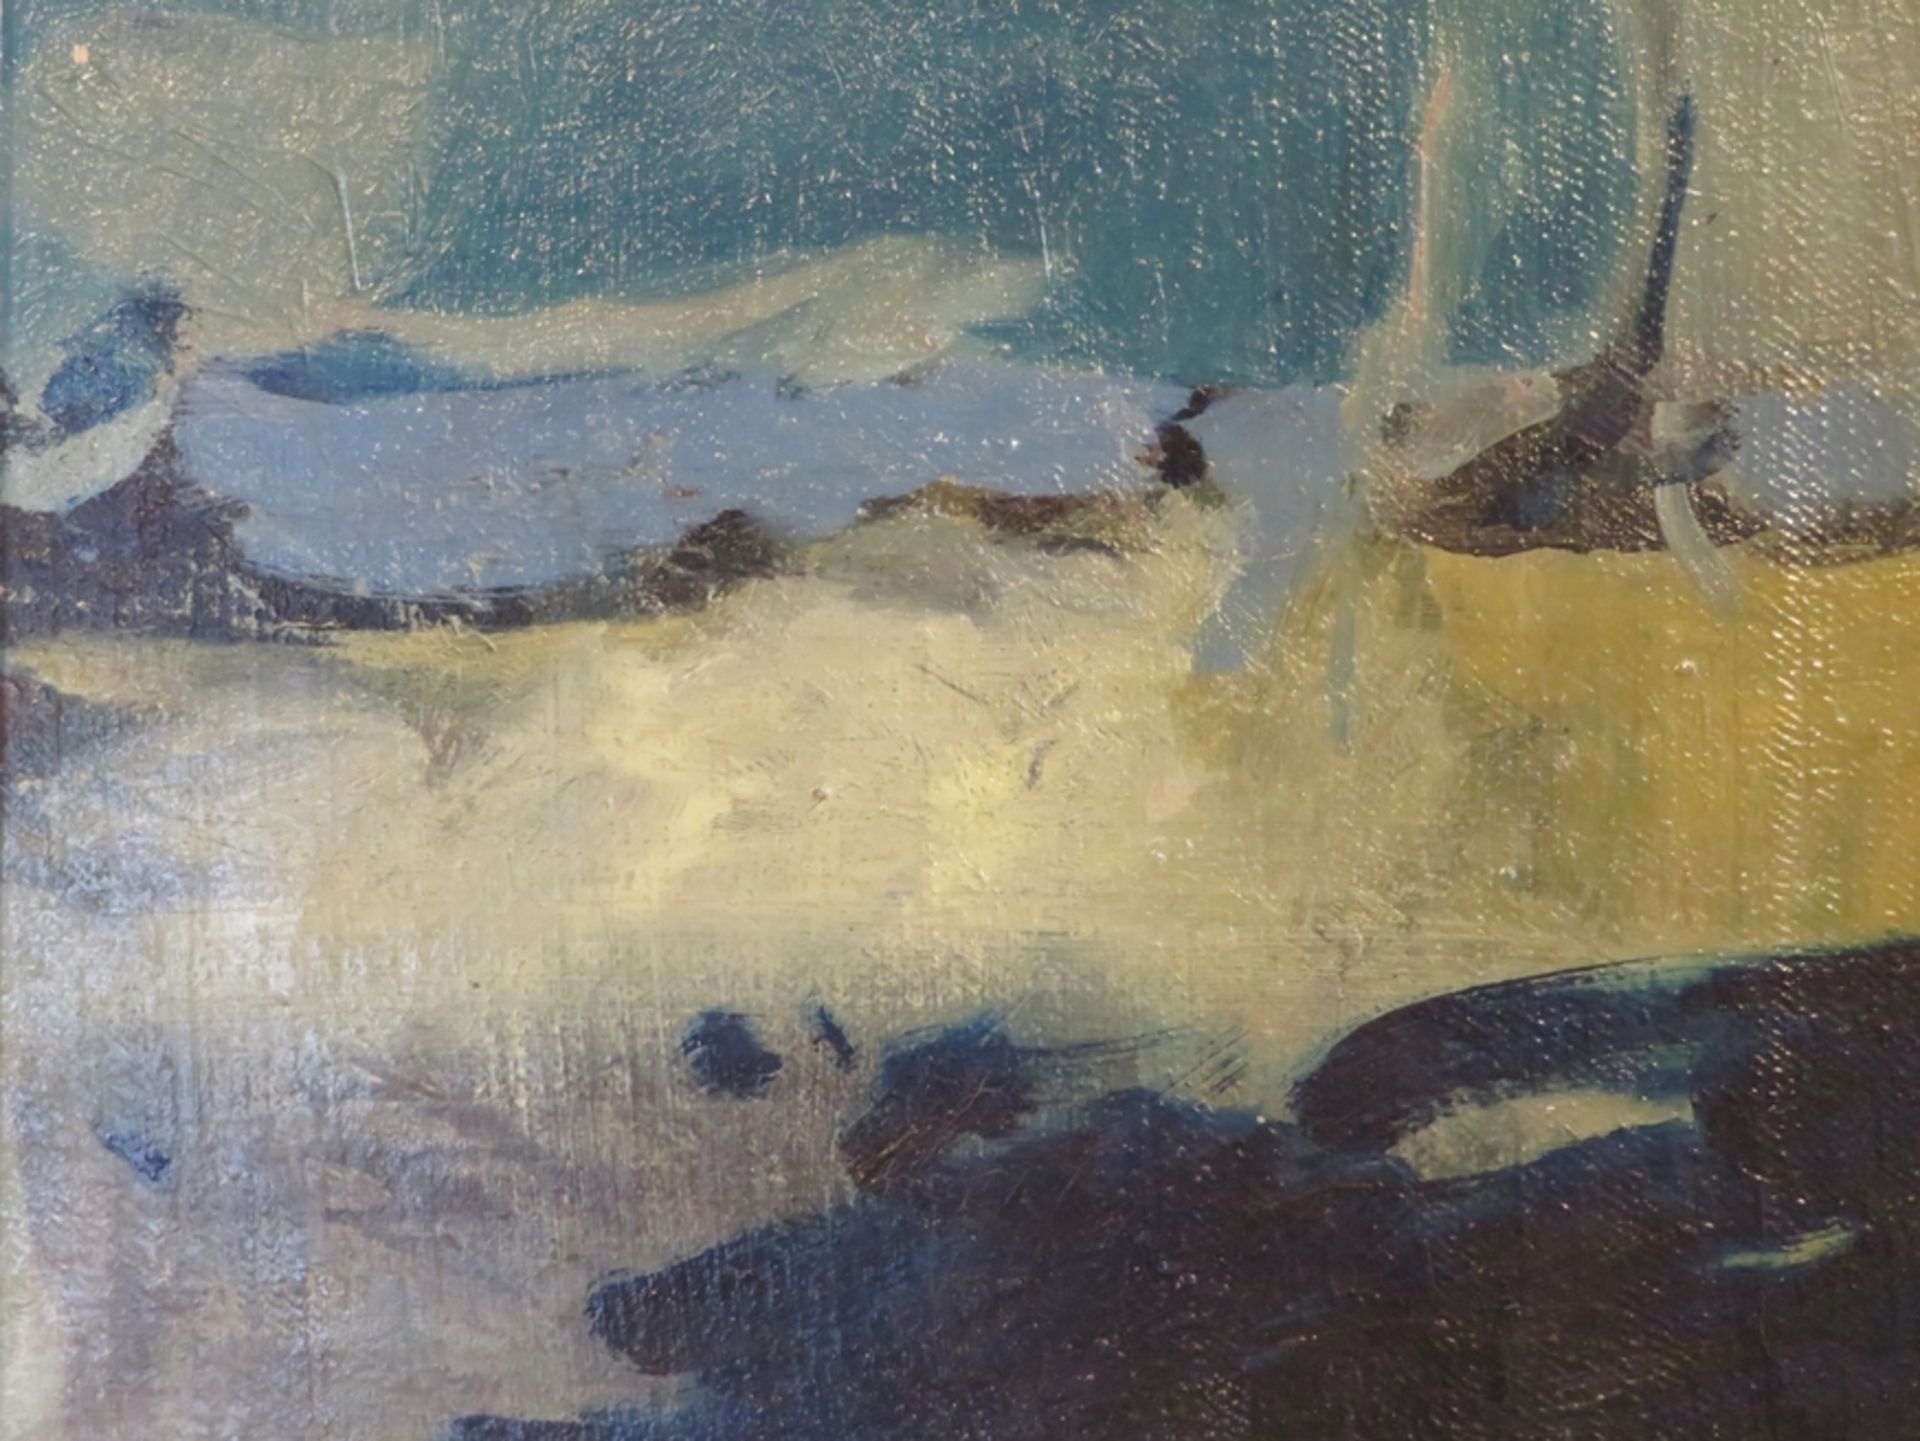 Unbekannt, 1. Hälfte 20. Jahrhundert, "Moderne Komposition in Blautönen", Öl/Leinwand, 31 x 25 cm, 